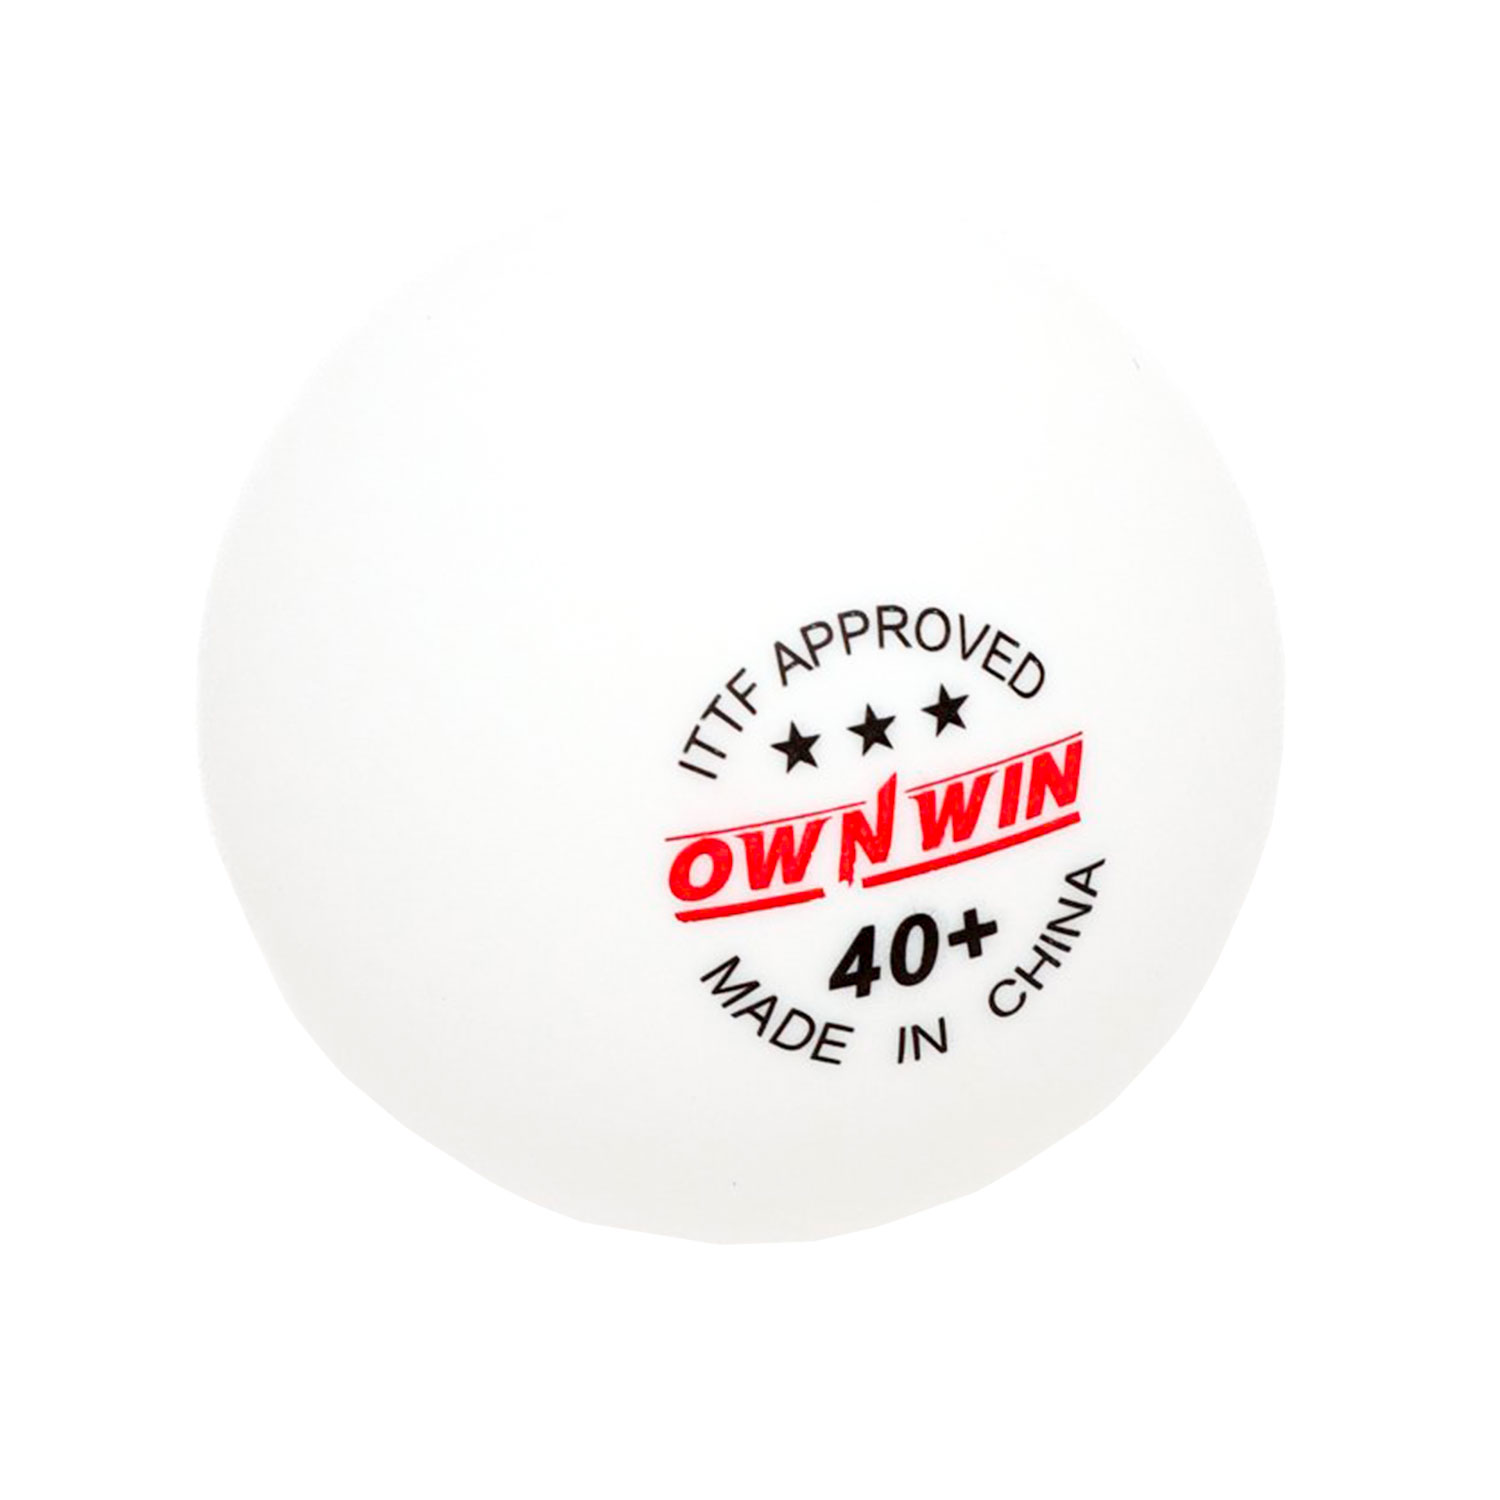 Мячи для настольного тенниса Ownwin 40+, 6шт